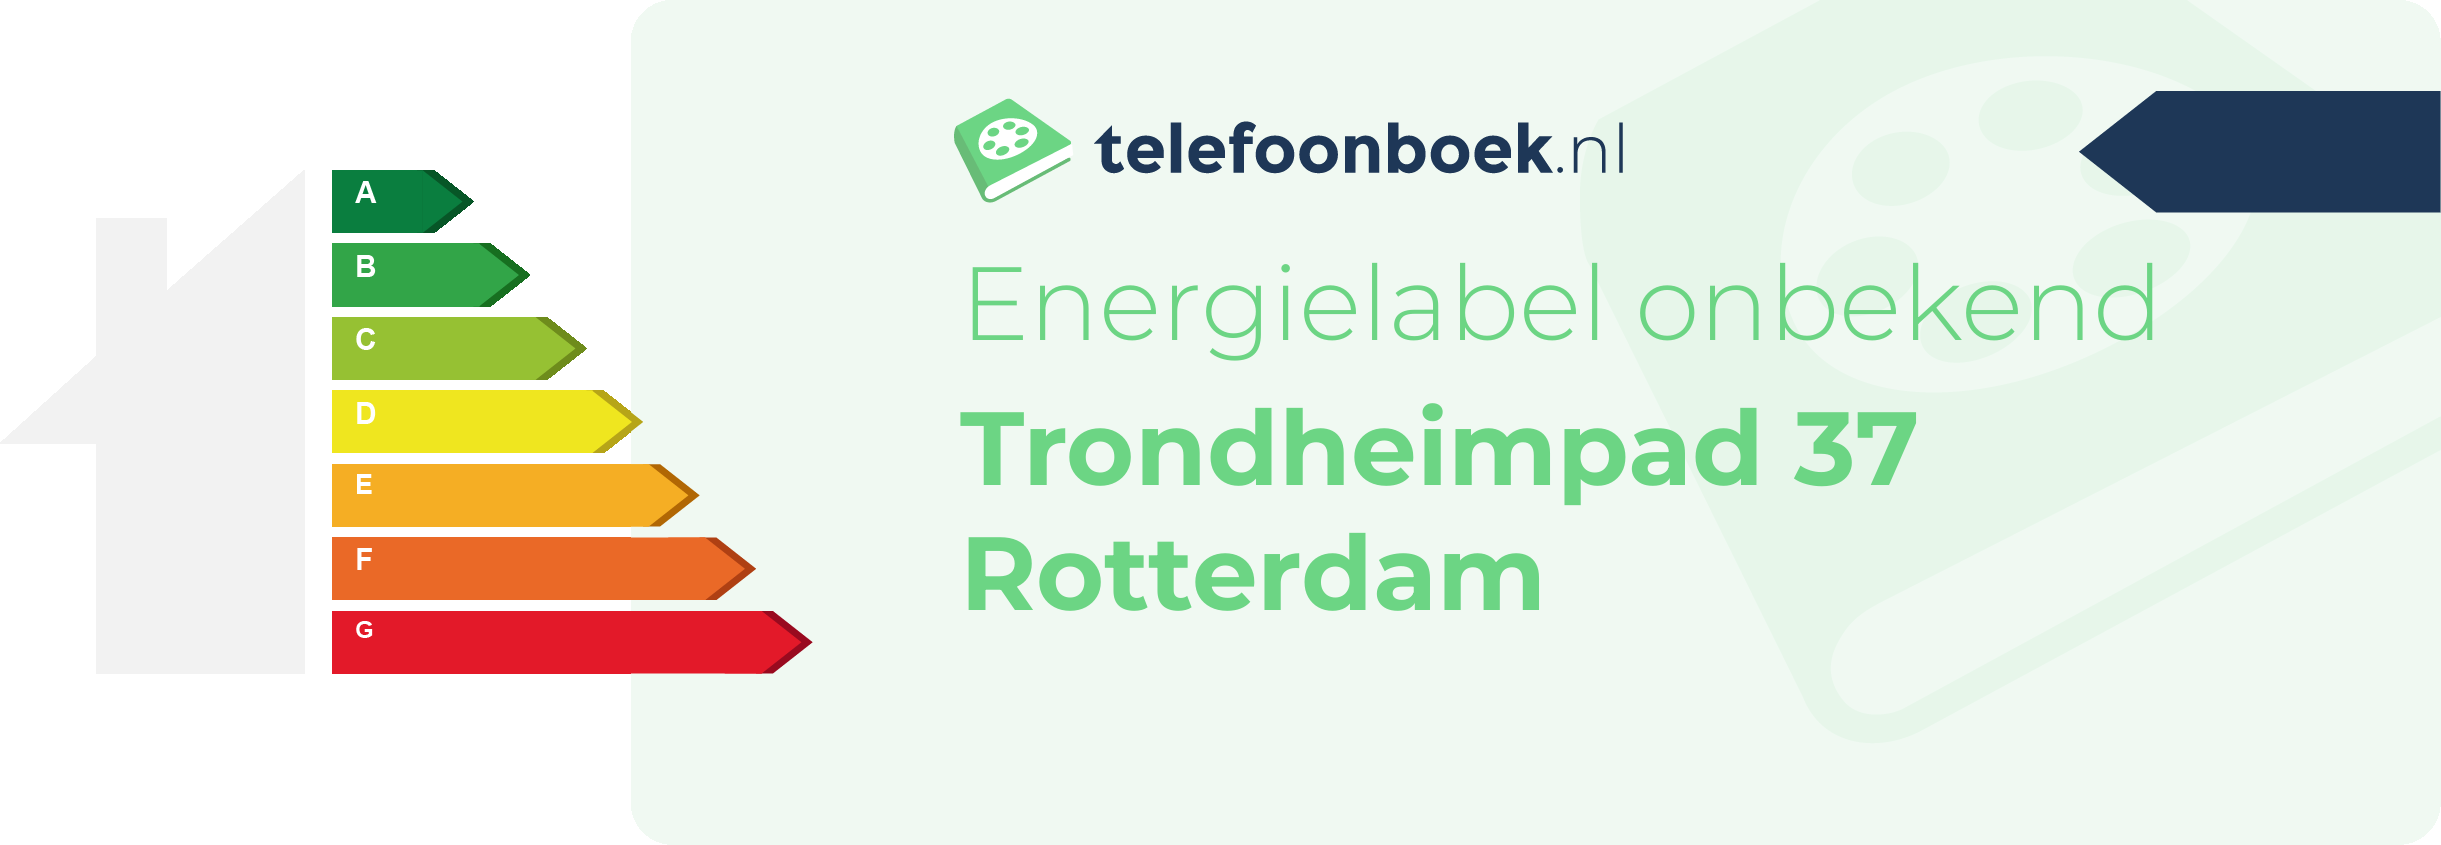 Energielabel Trondheimpad 37 Rotterdam